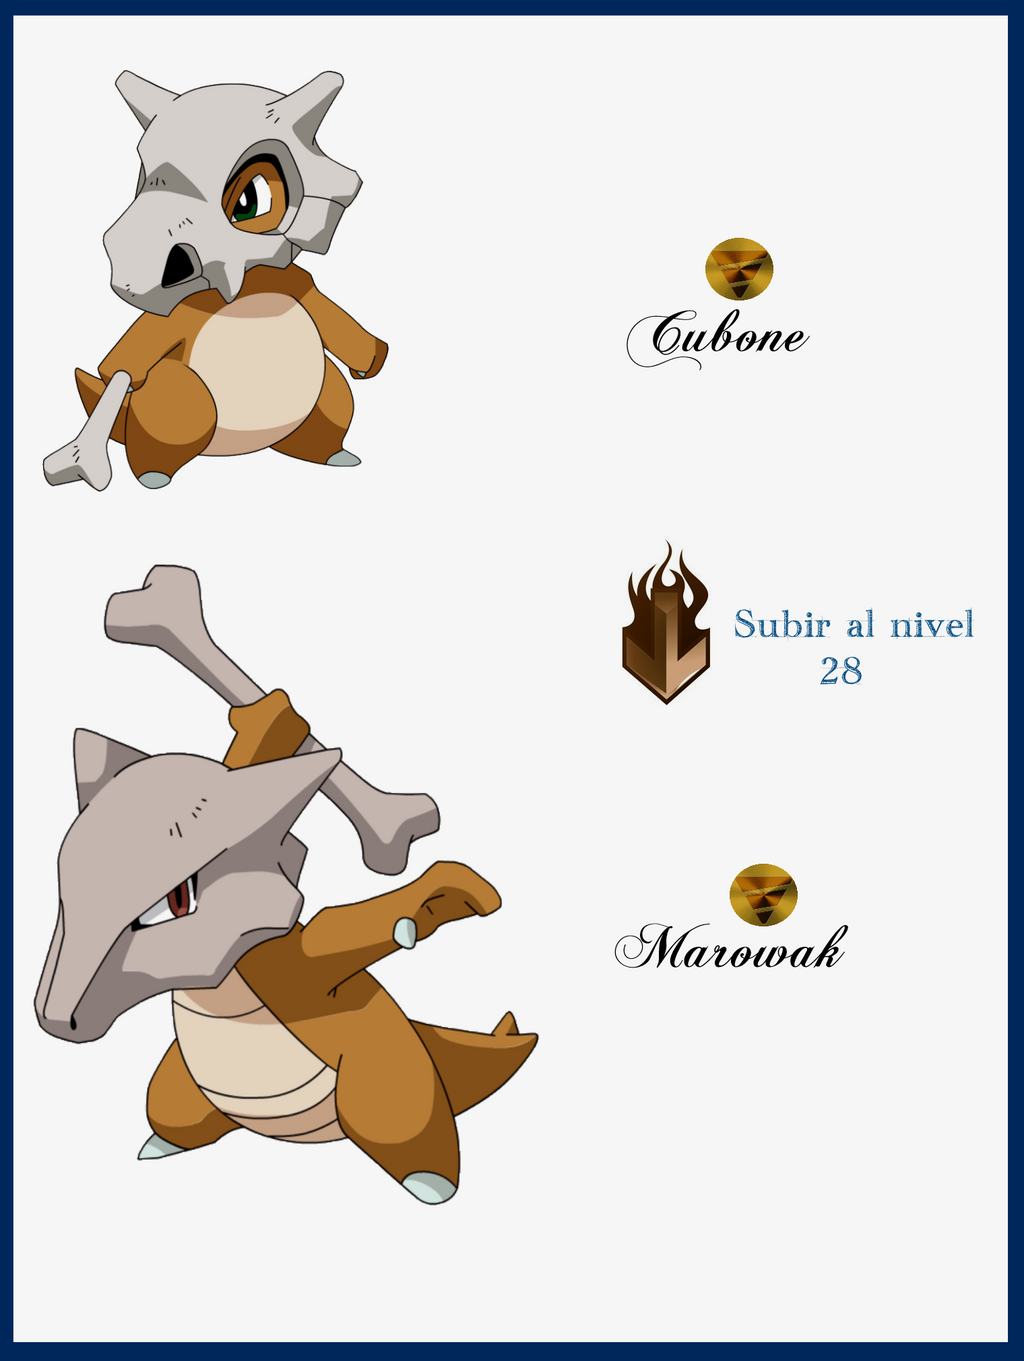 Pokemon Evolution Chain: #633-#635 by DoomsDemise on DeviantArt